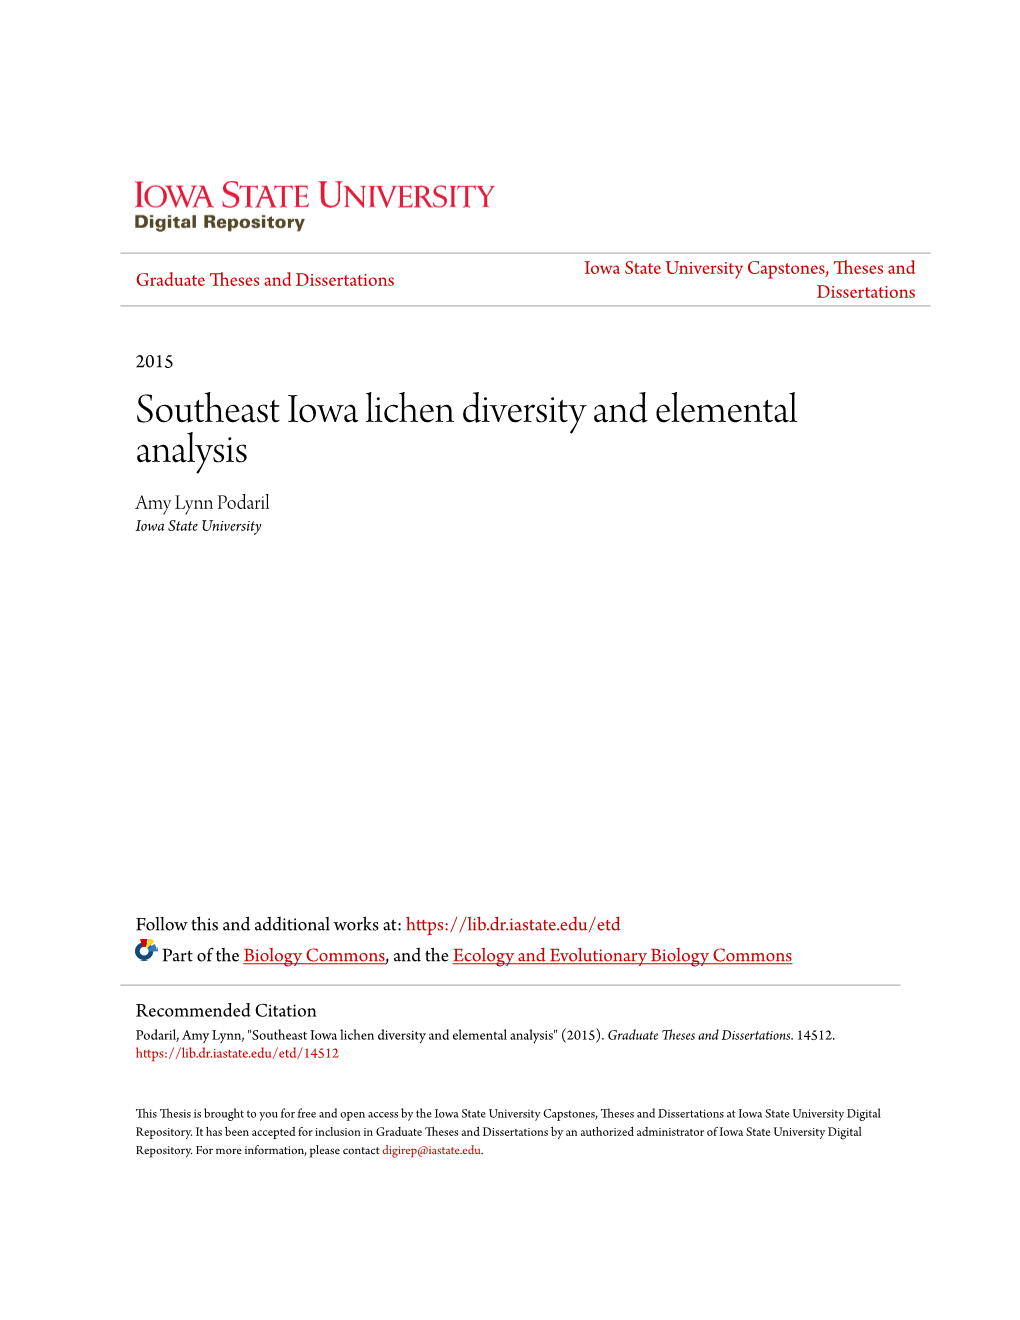 Southeast Iowa Lichen Diversity and Elemental Analysis Amy Lynn Podaril Iowa State University